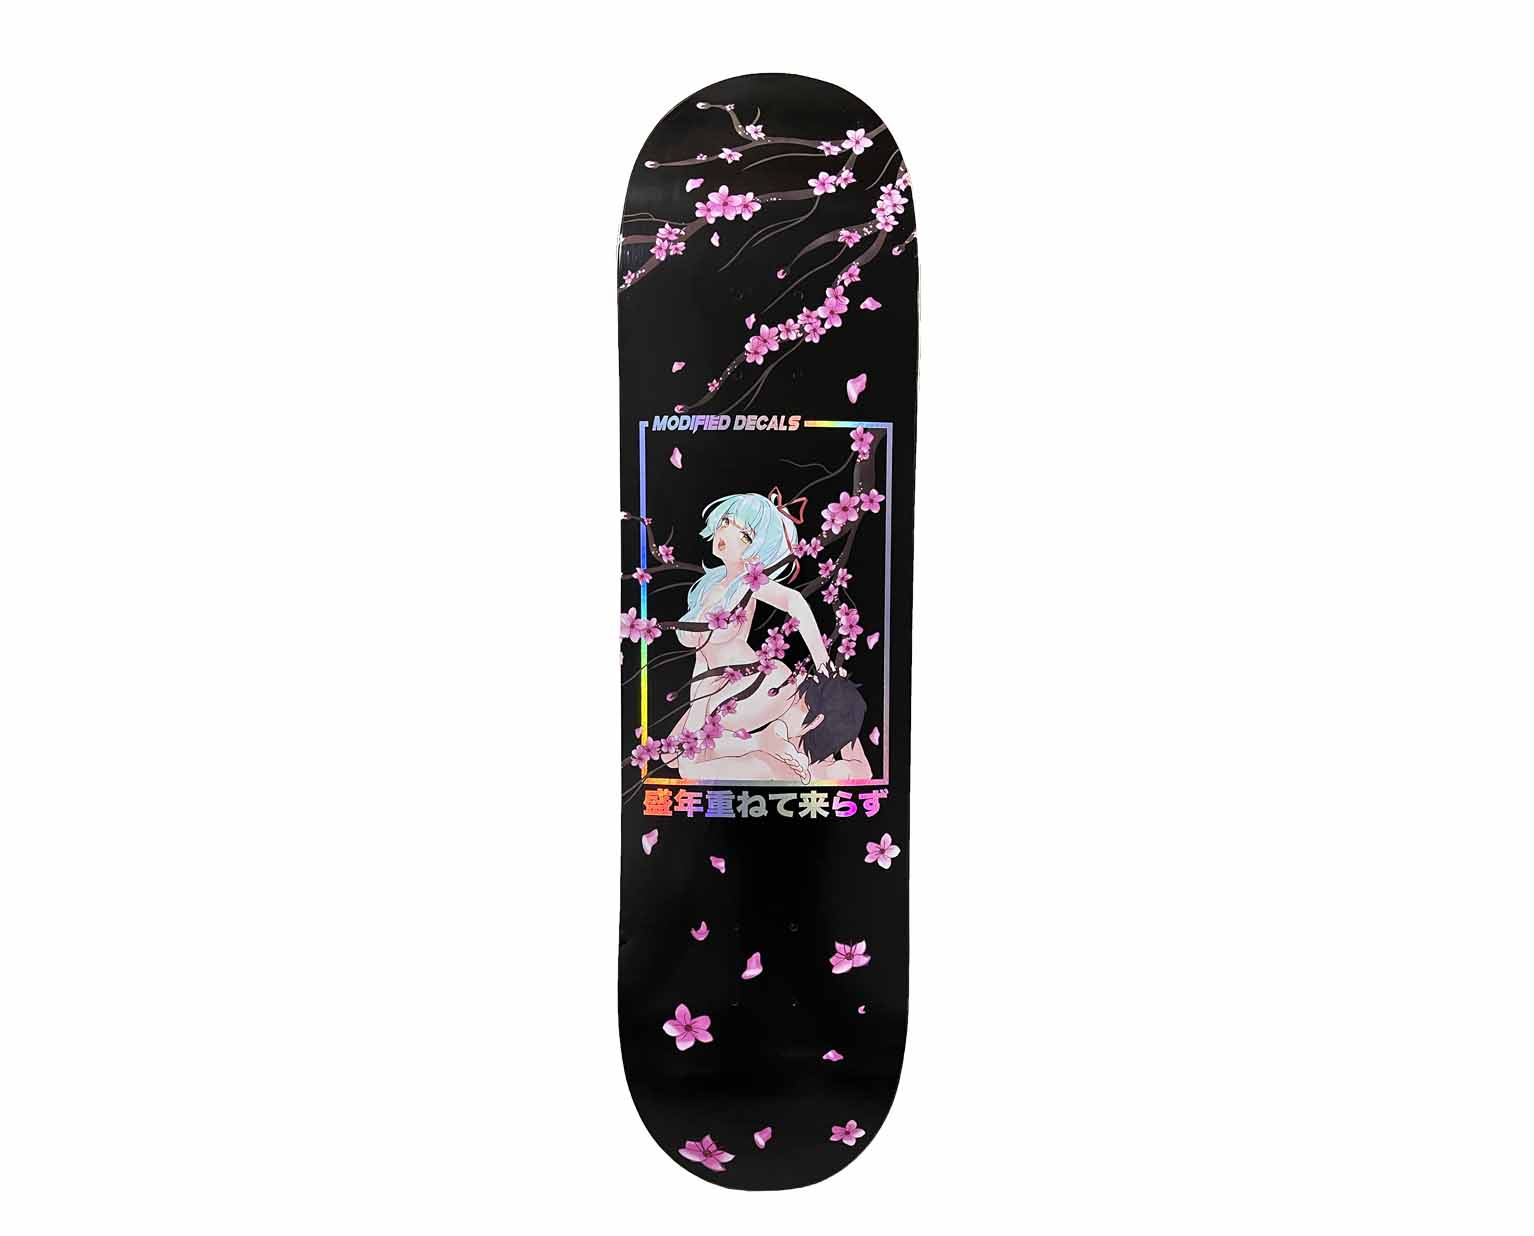 Anime SkateboardNarutoUzumaki NarutoSkateboard Complete Pro Skateboard  Adult Double Cone Skateboard 7Layer Canadian MapleTreasure Board   Amazonse Sports  Outdoors